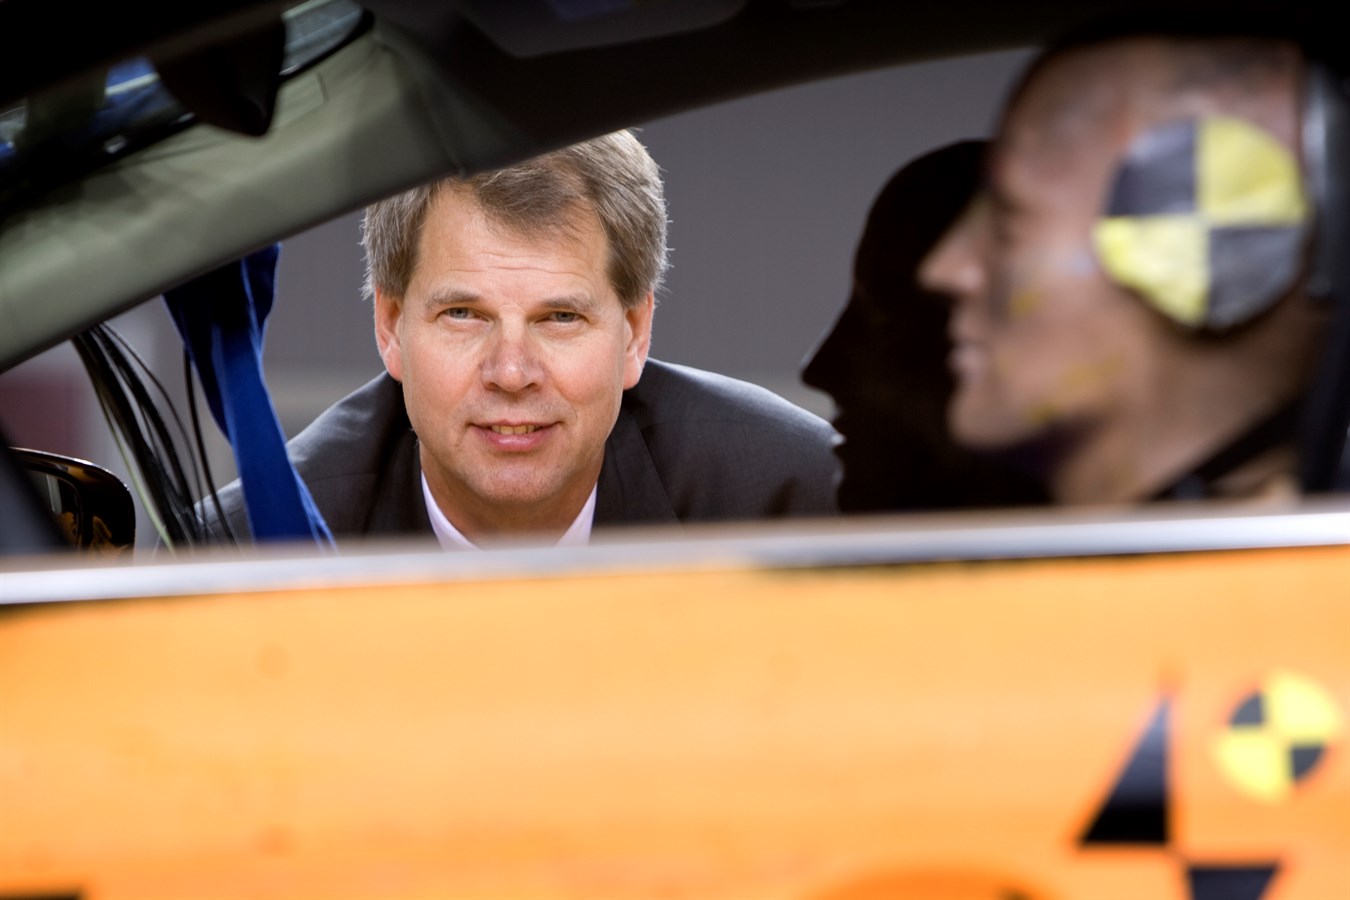 Hans Nyth, Director Volvo Car Safety Centre